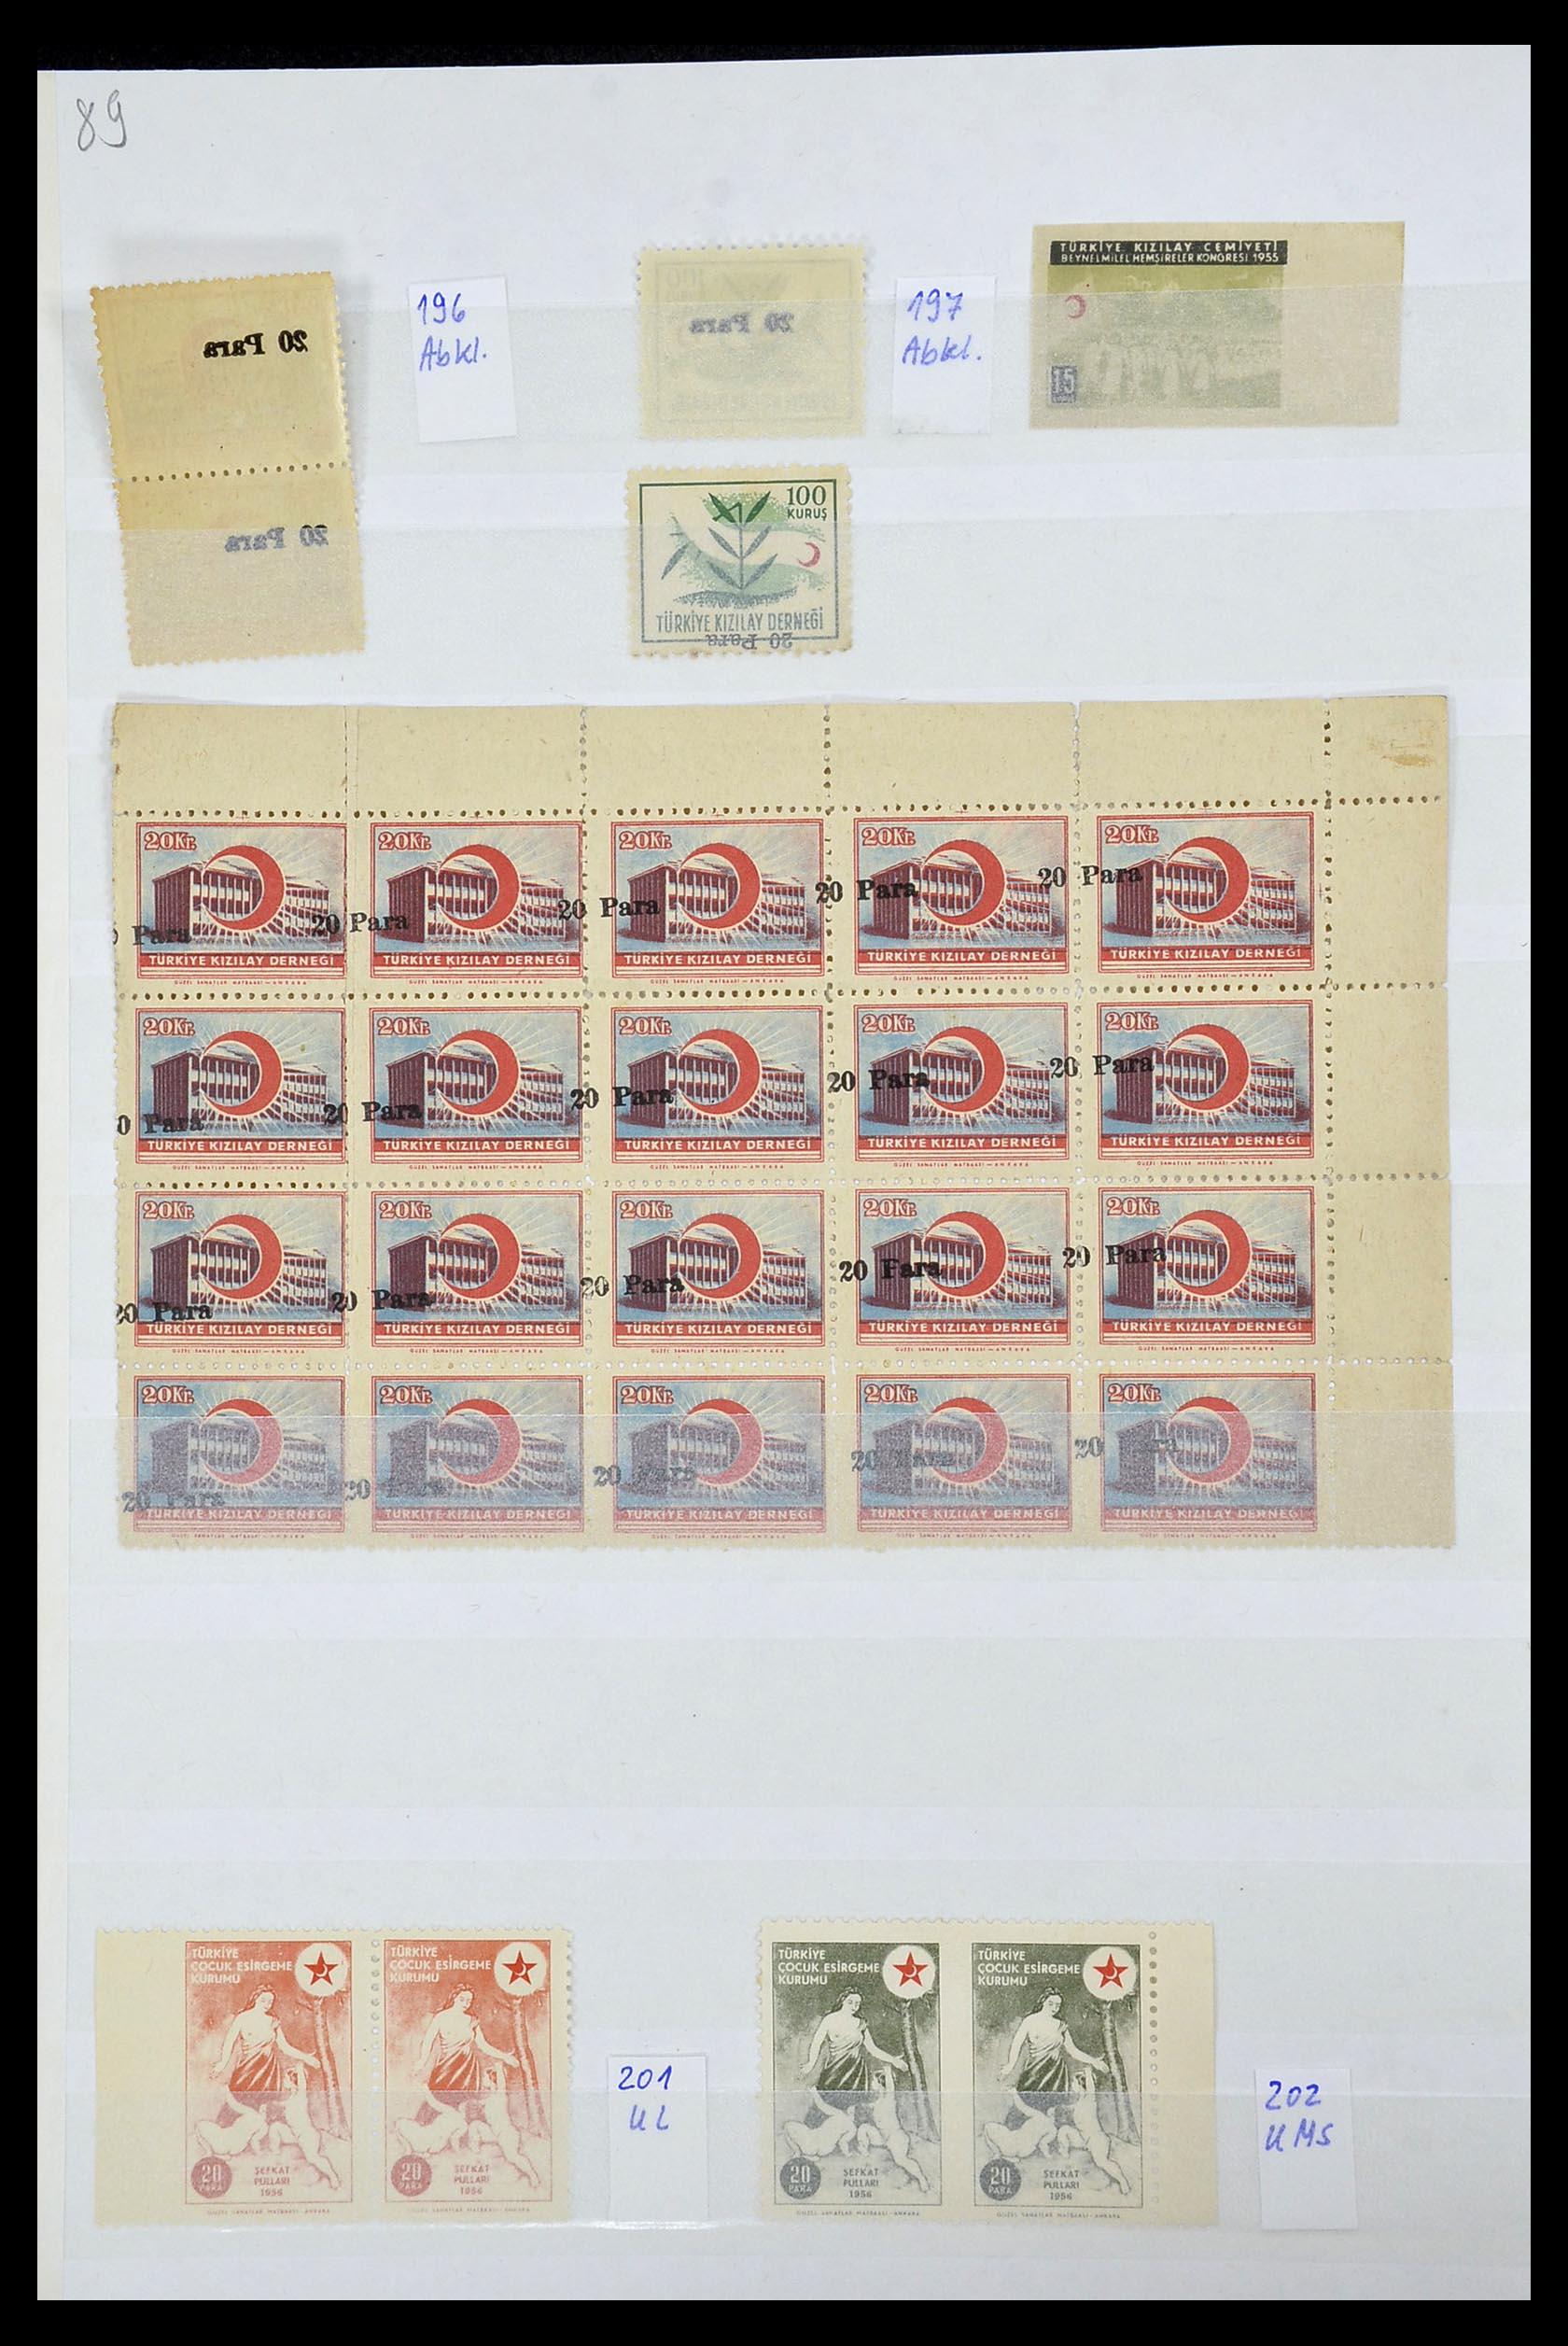 35004 010 - Stamp Collection 35004 Turkey varieties 1927-1957.